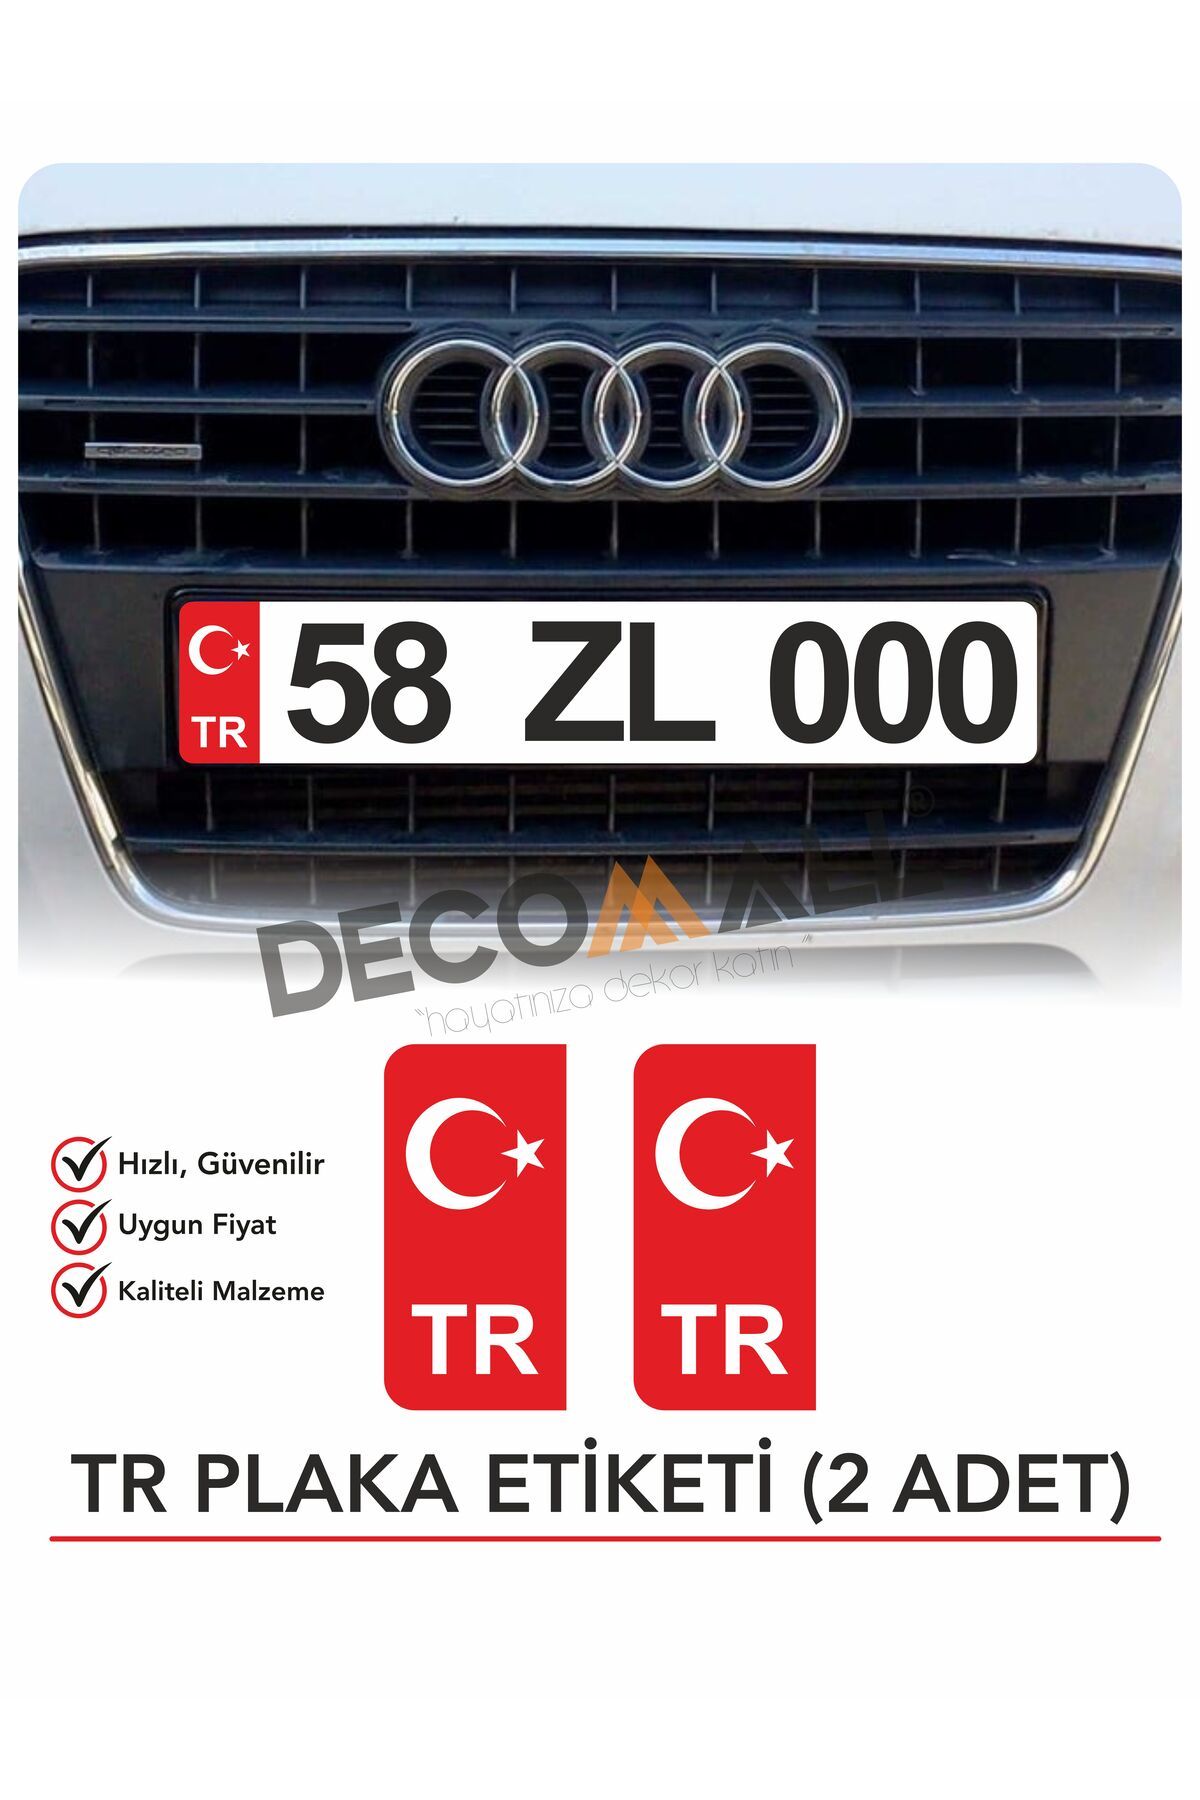 DECOMALL Tr Plaka Stıcker 2'li - Türkiye Plaka Stıcker - Türkiye Plakalık Stickeri 2 li